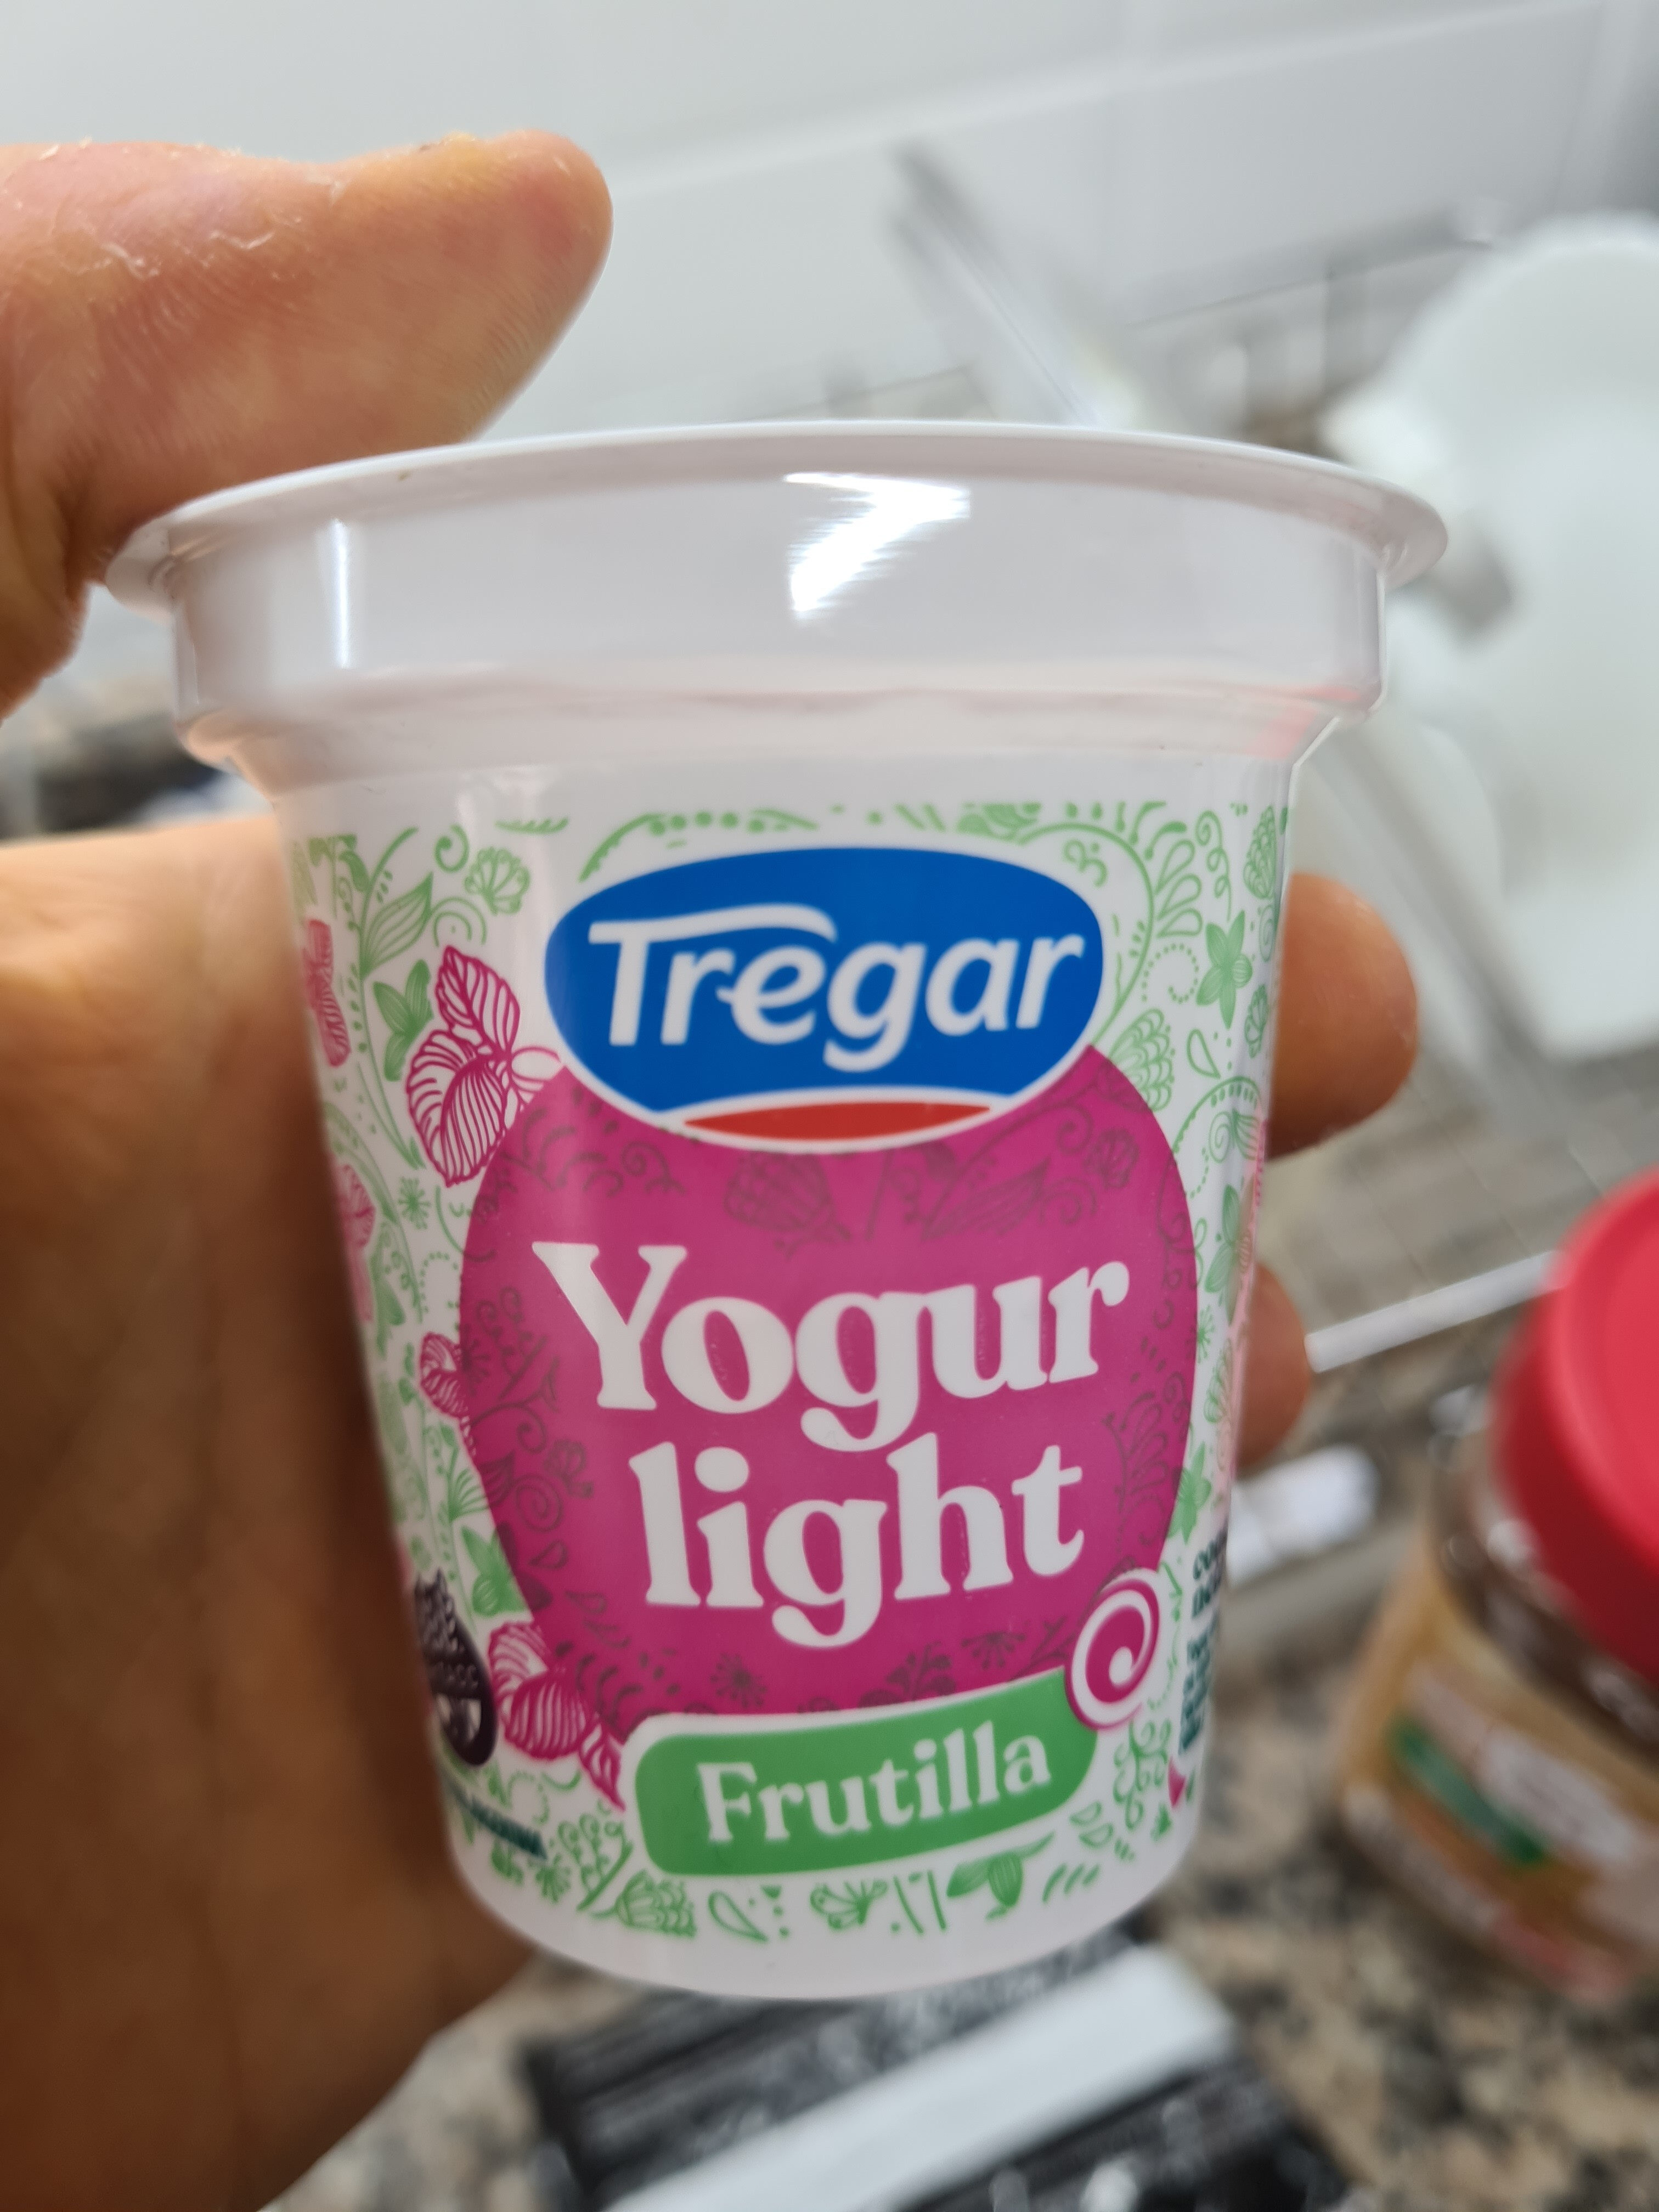 Yogur light frutilla - Product - en